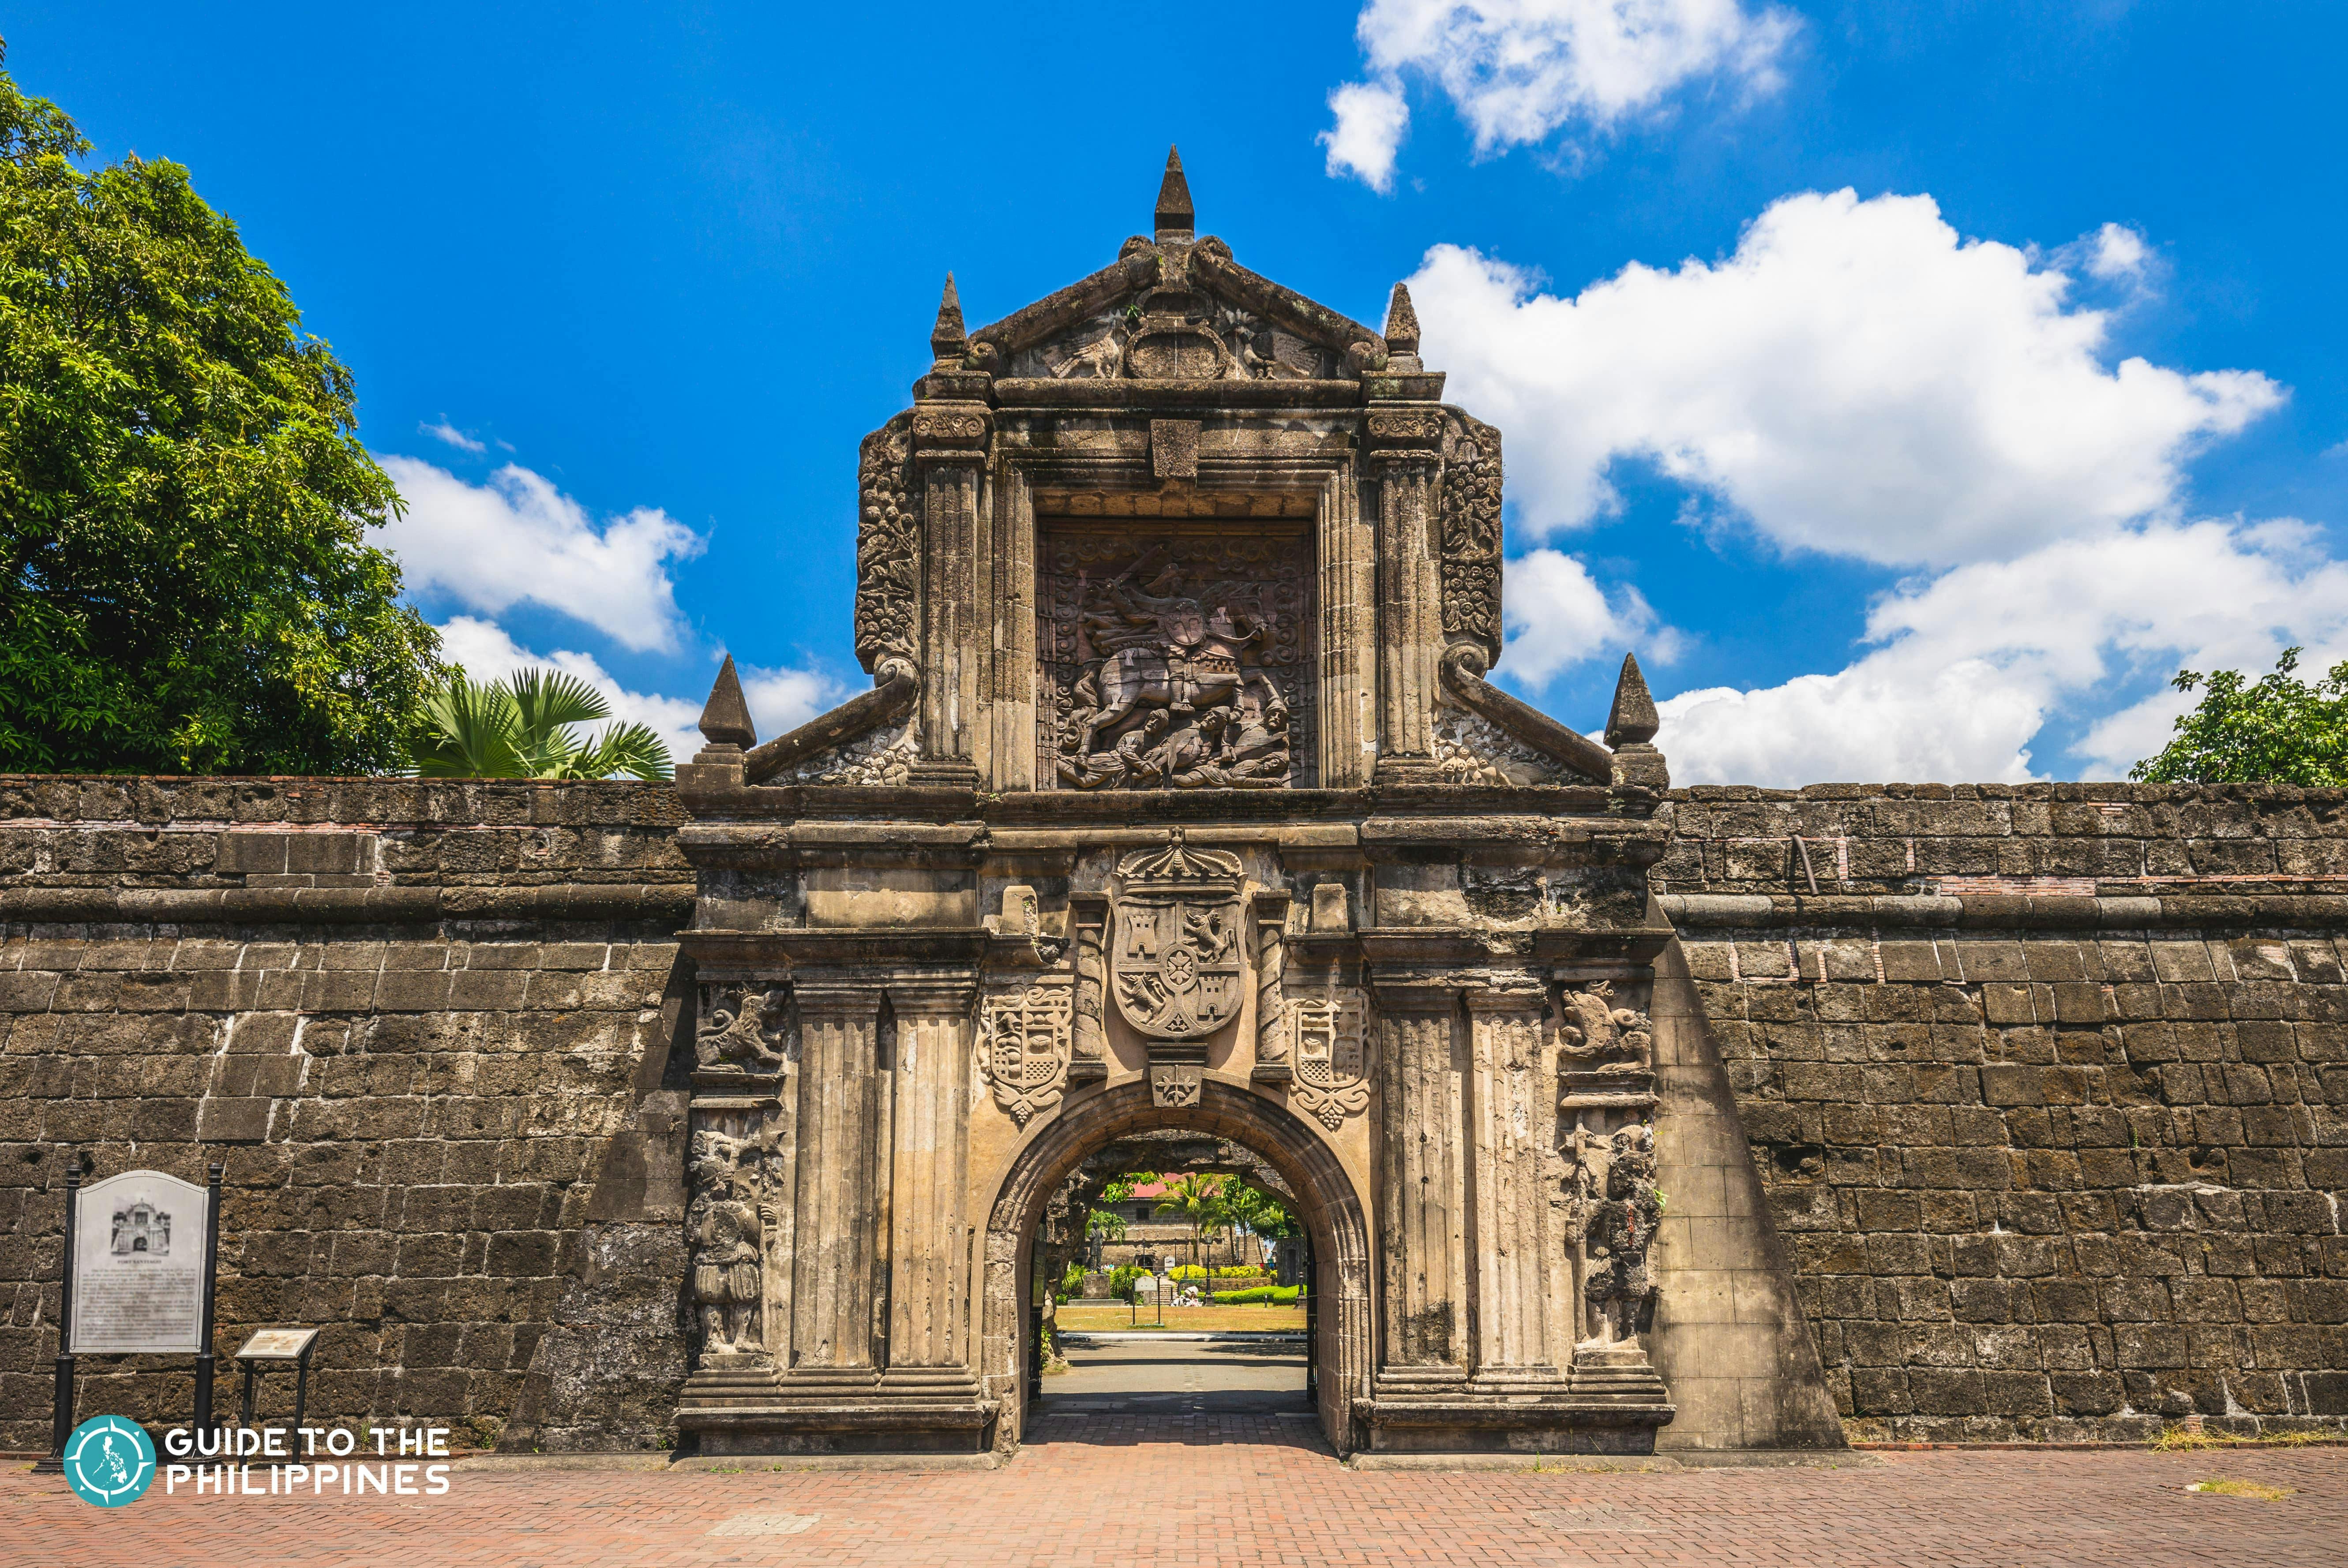 Facade of Fort Santiago inside Intramuros